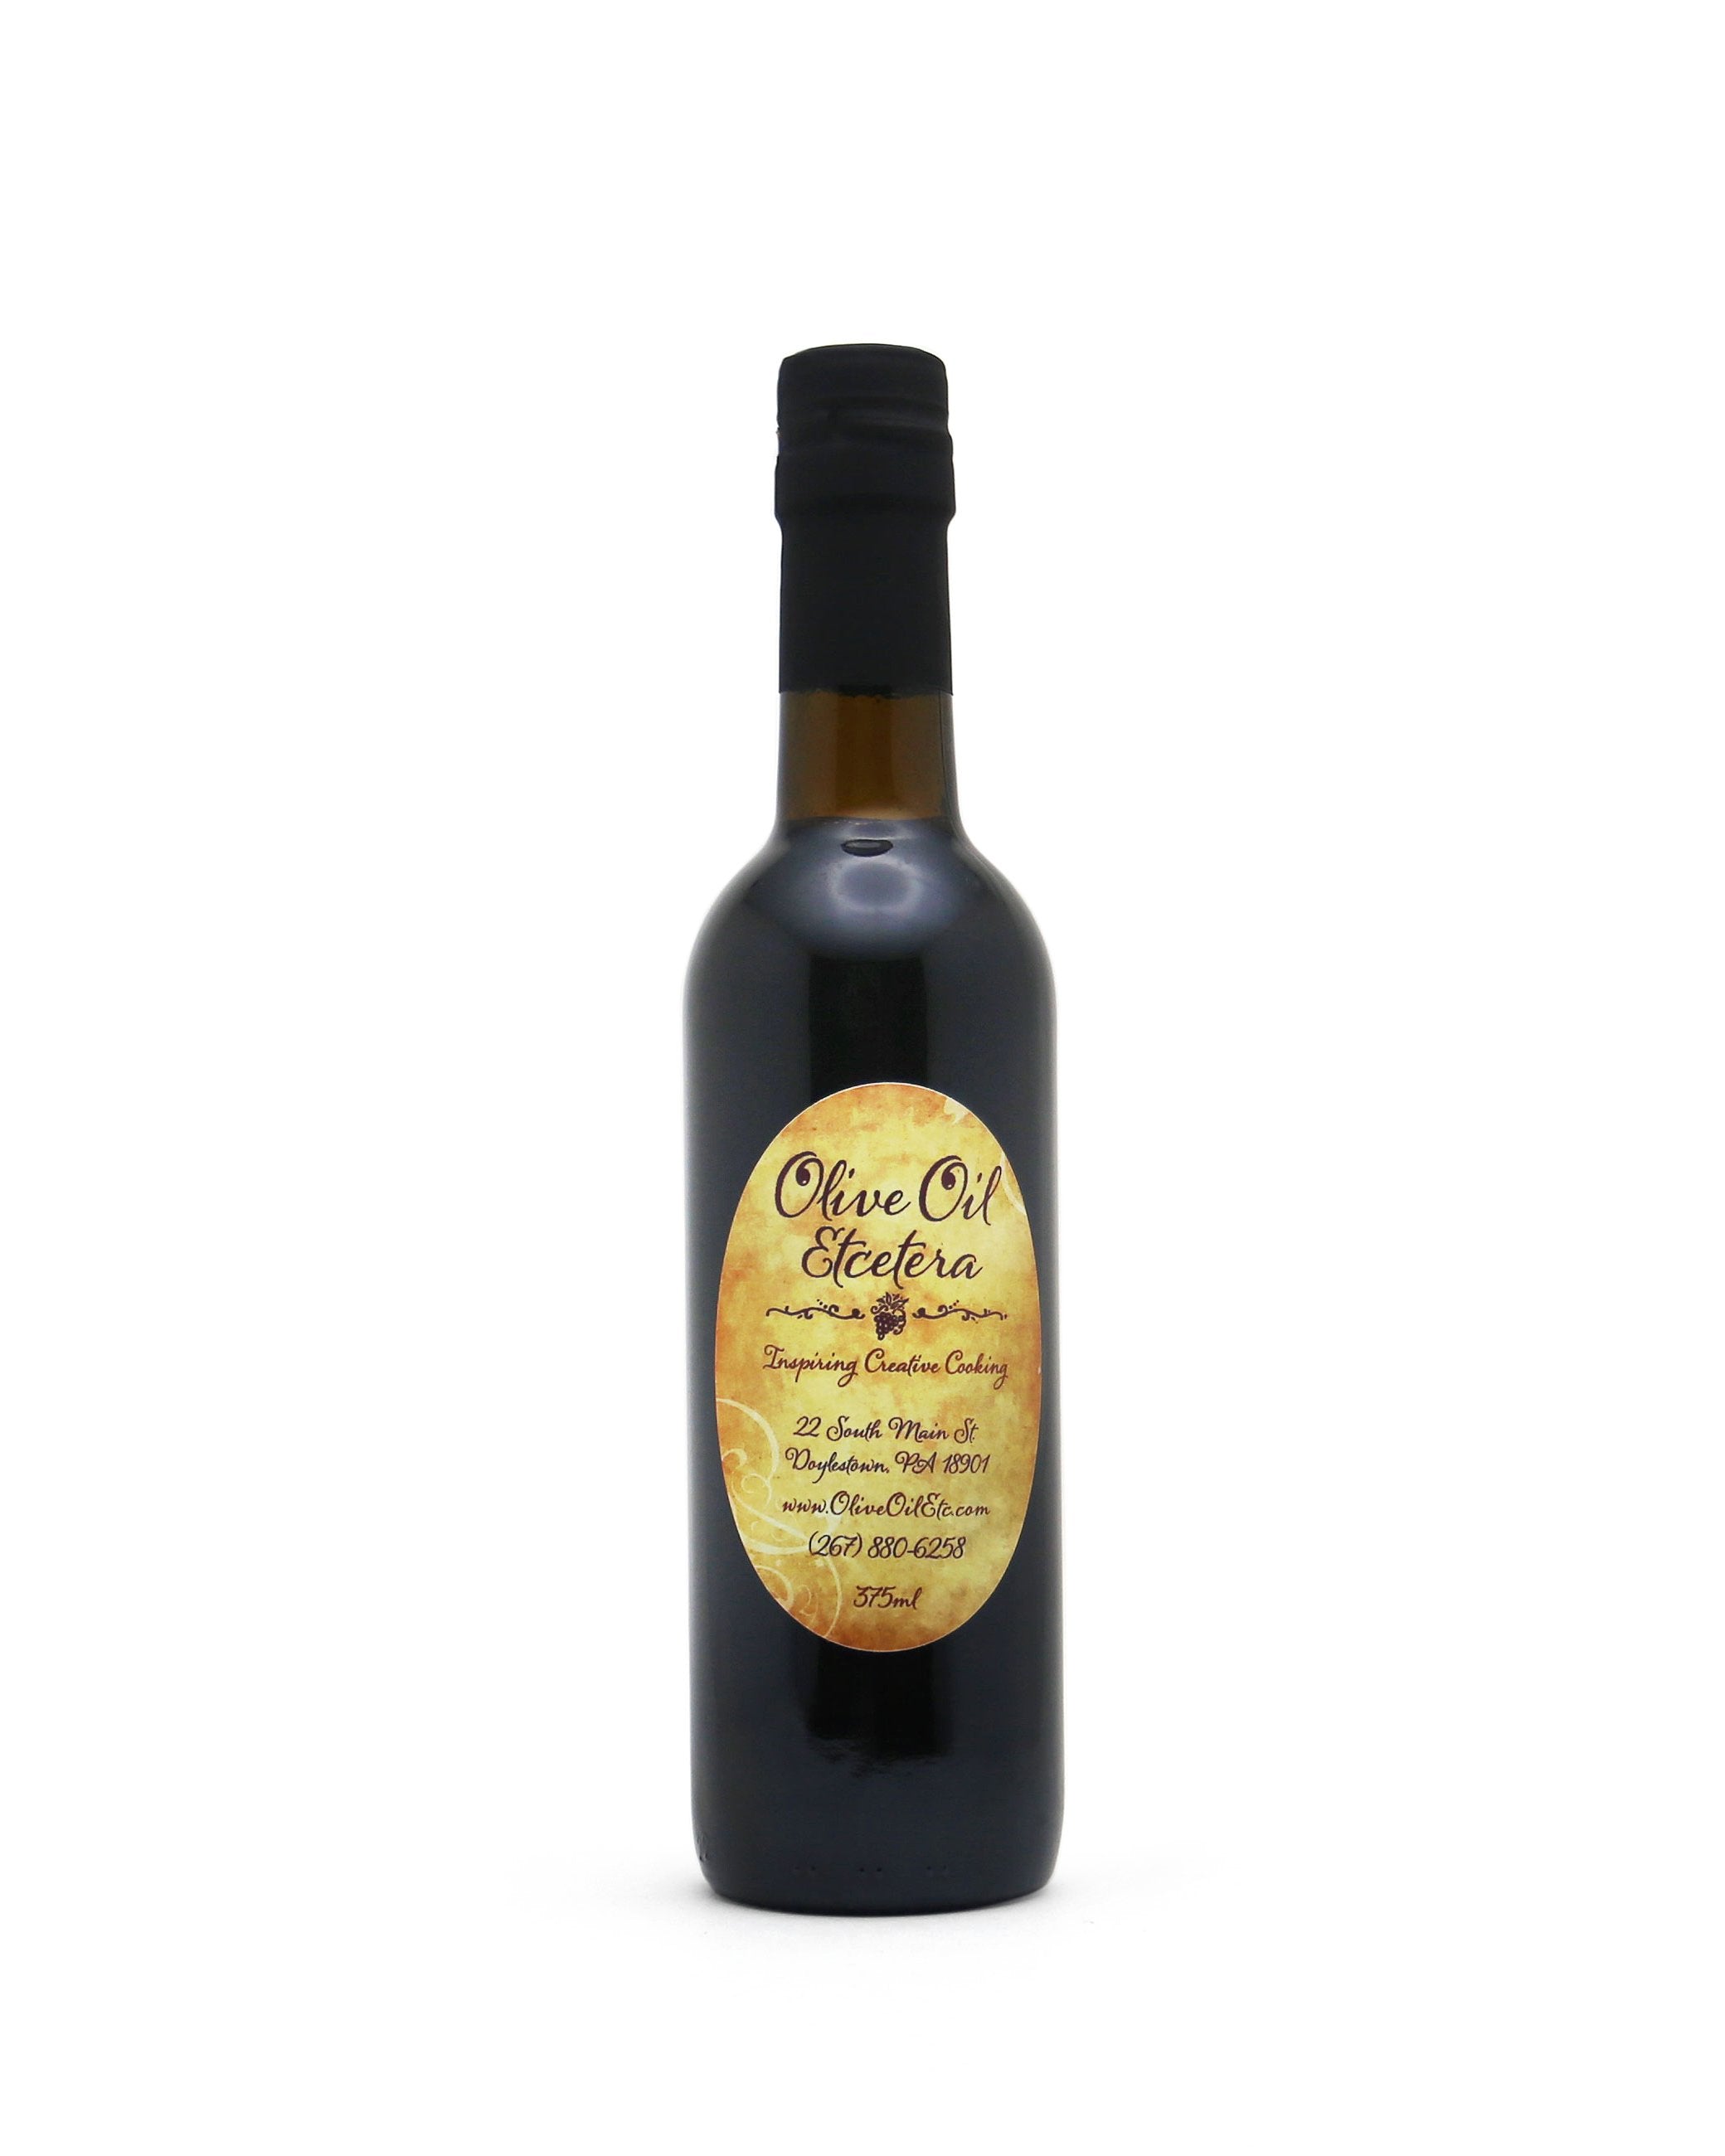 Garlic Herb Olive Oil - Olive Oil Etcetera - Bucks county's gourmet olive oil and vinegar shop